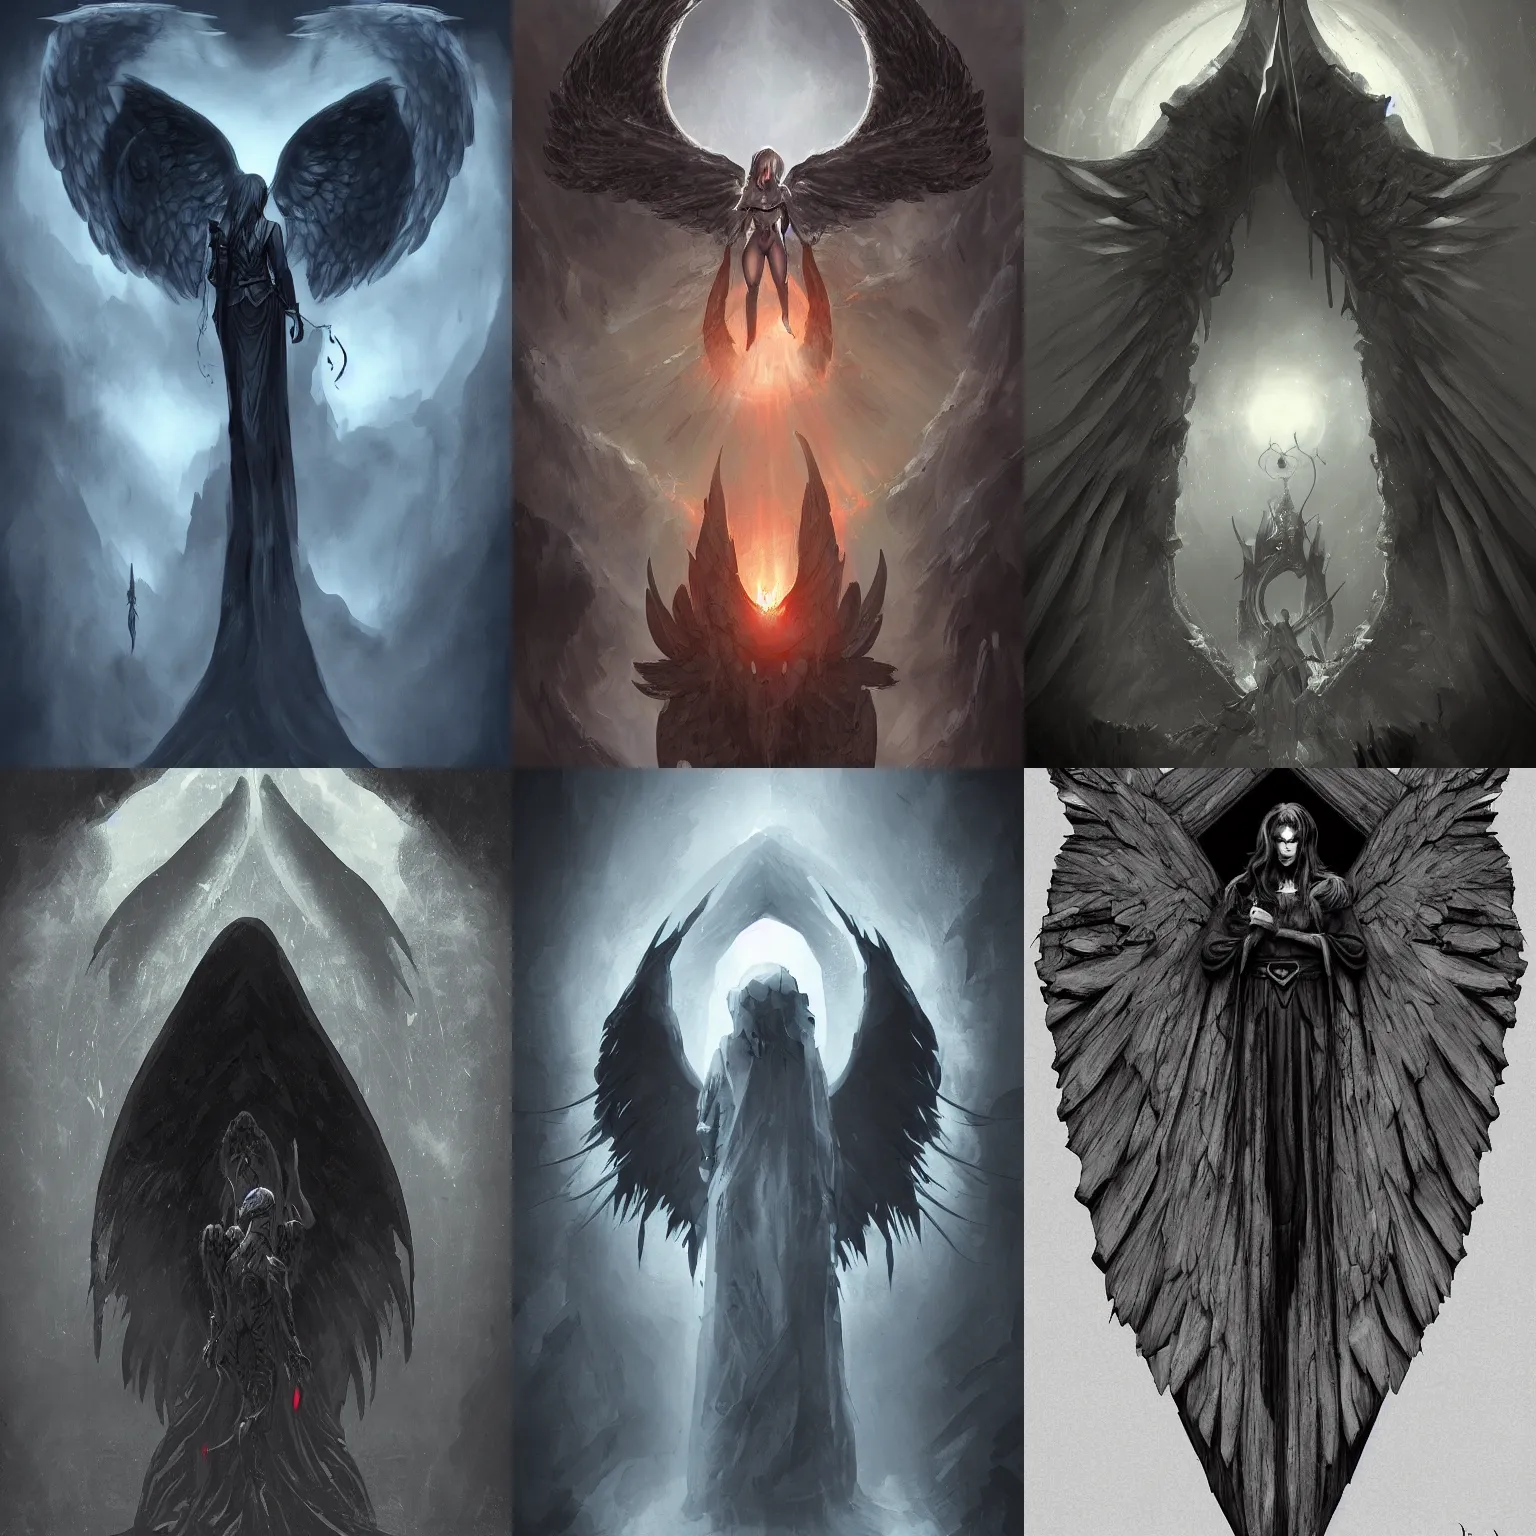 Prompt: dark portal with angel wings above it, rule of thirds, artstation